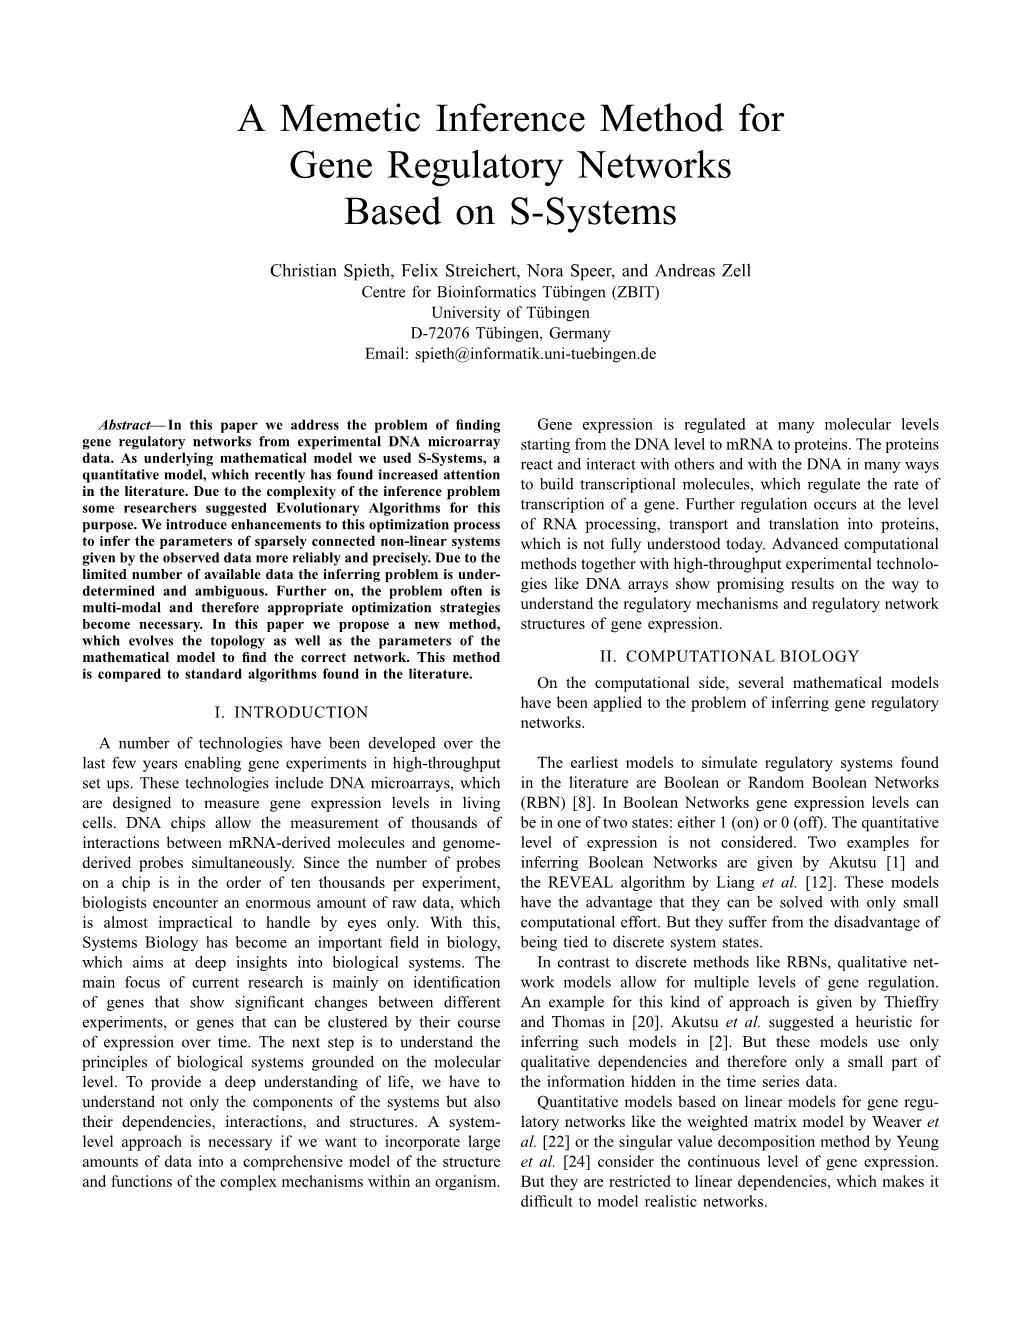 A Memetic Inference Method for Gene Regulatory Networks Based on S-Systems